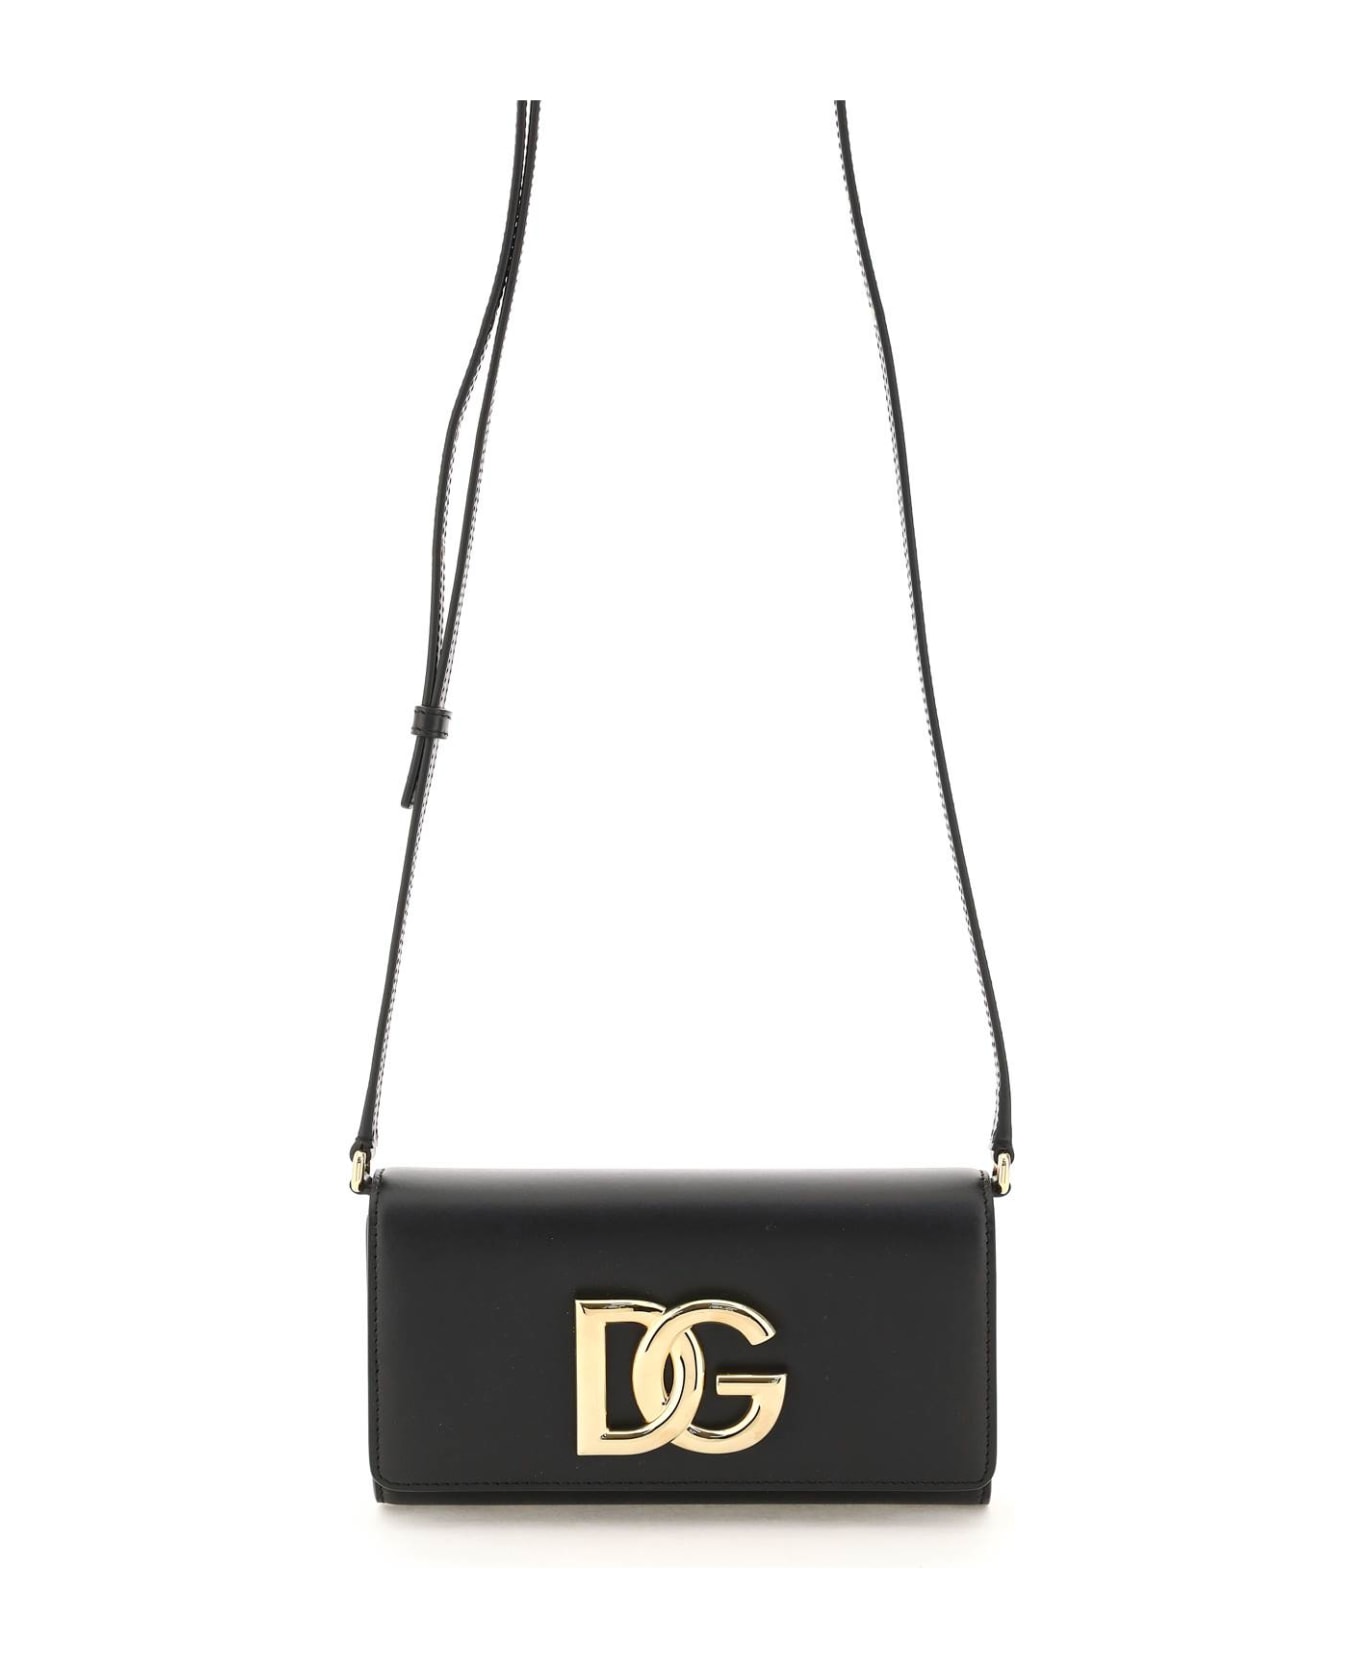 Dolce & Gabbana Dg Leather Clutch Bag - Nero ショルダーバッグ